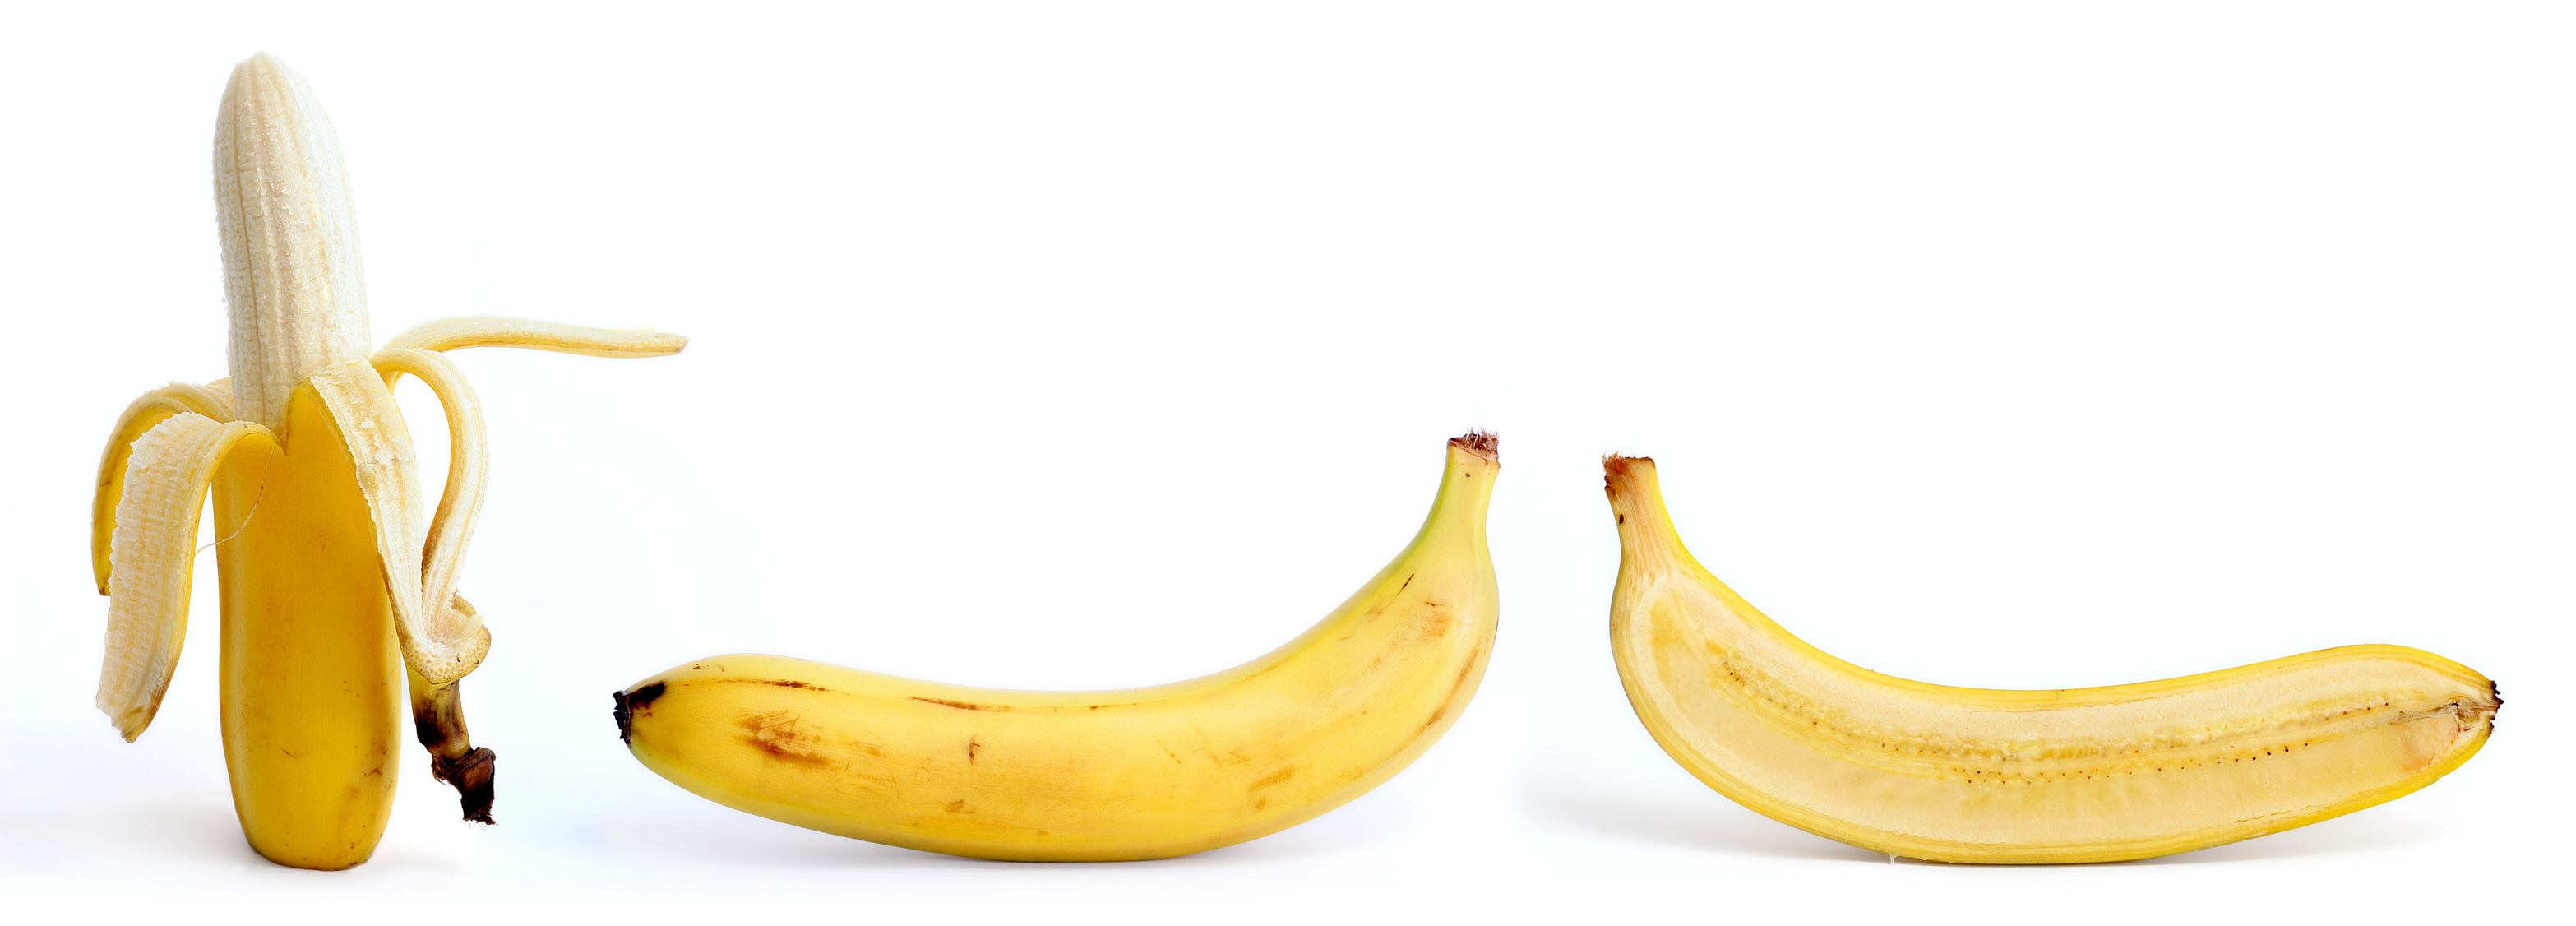 Banana and cross section